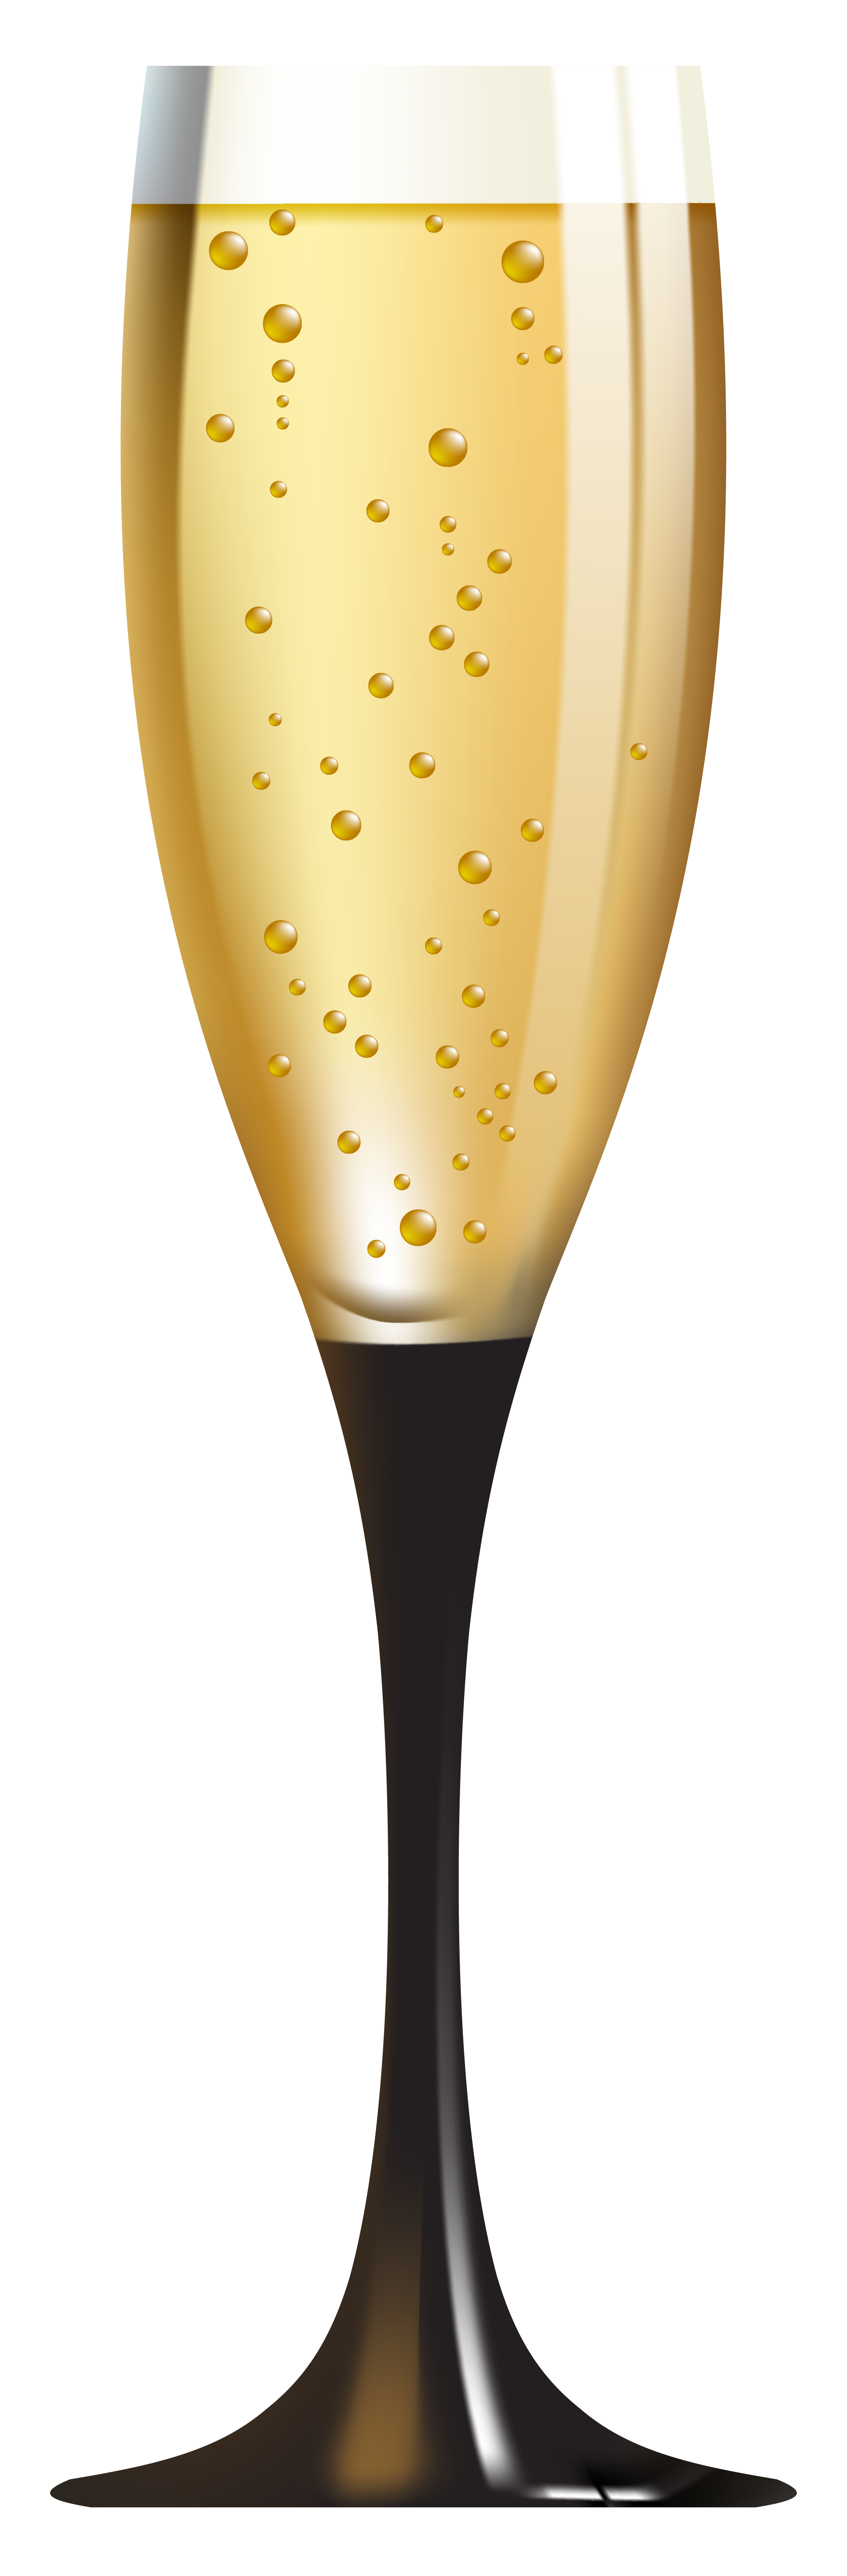 Glass clip art free. Anniversary clipart champagne flute